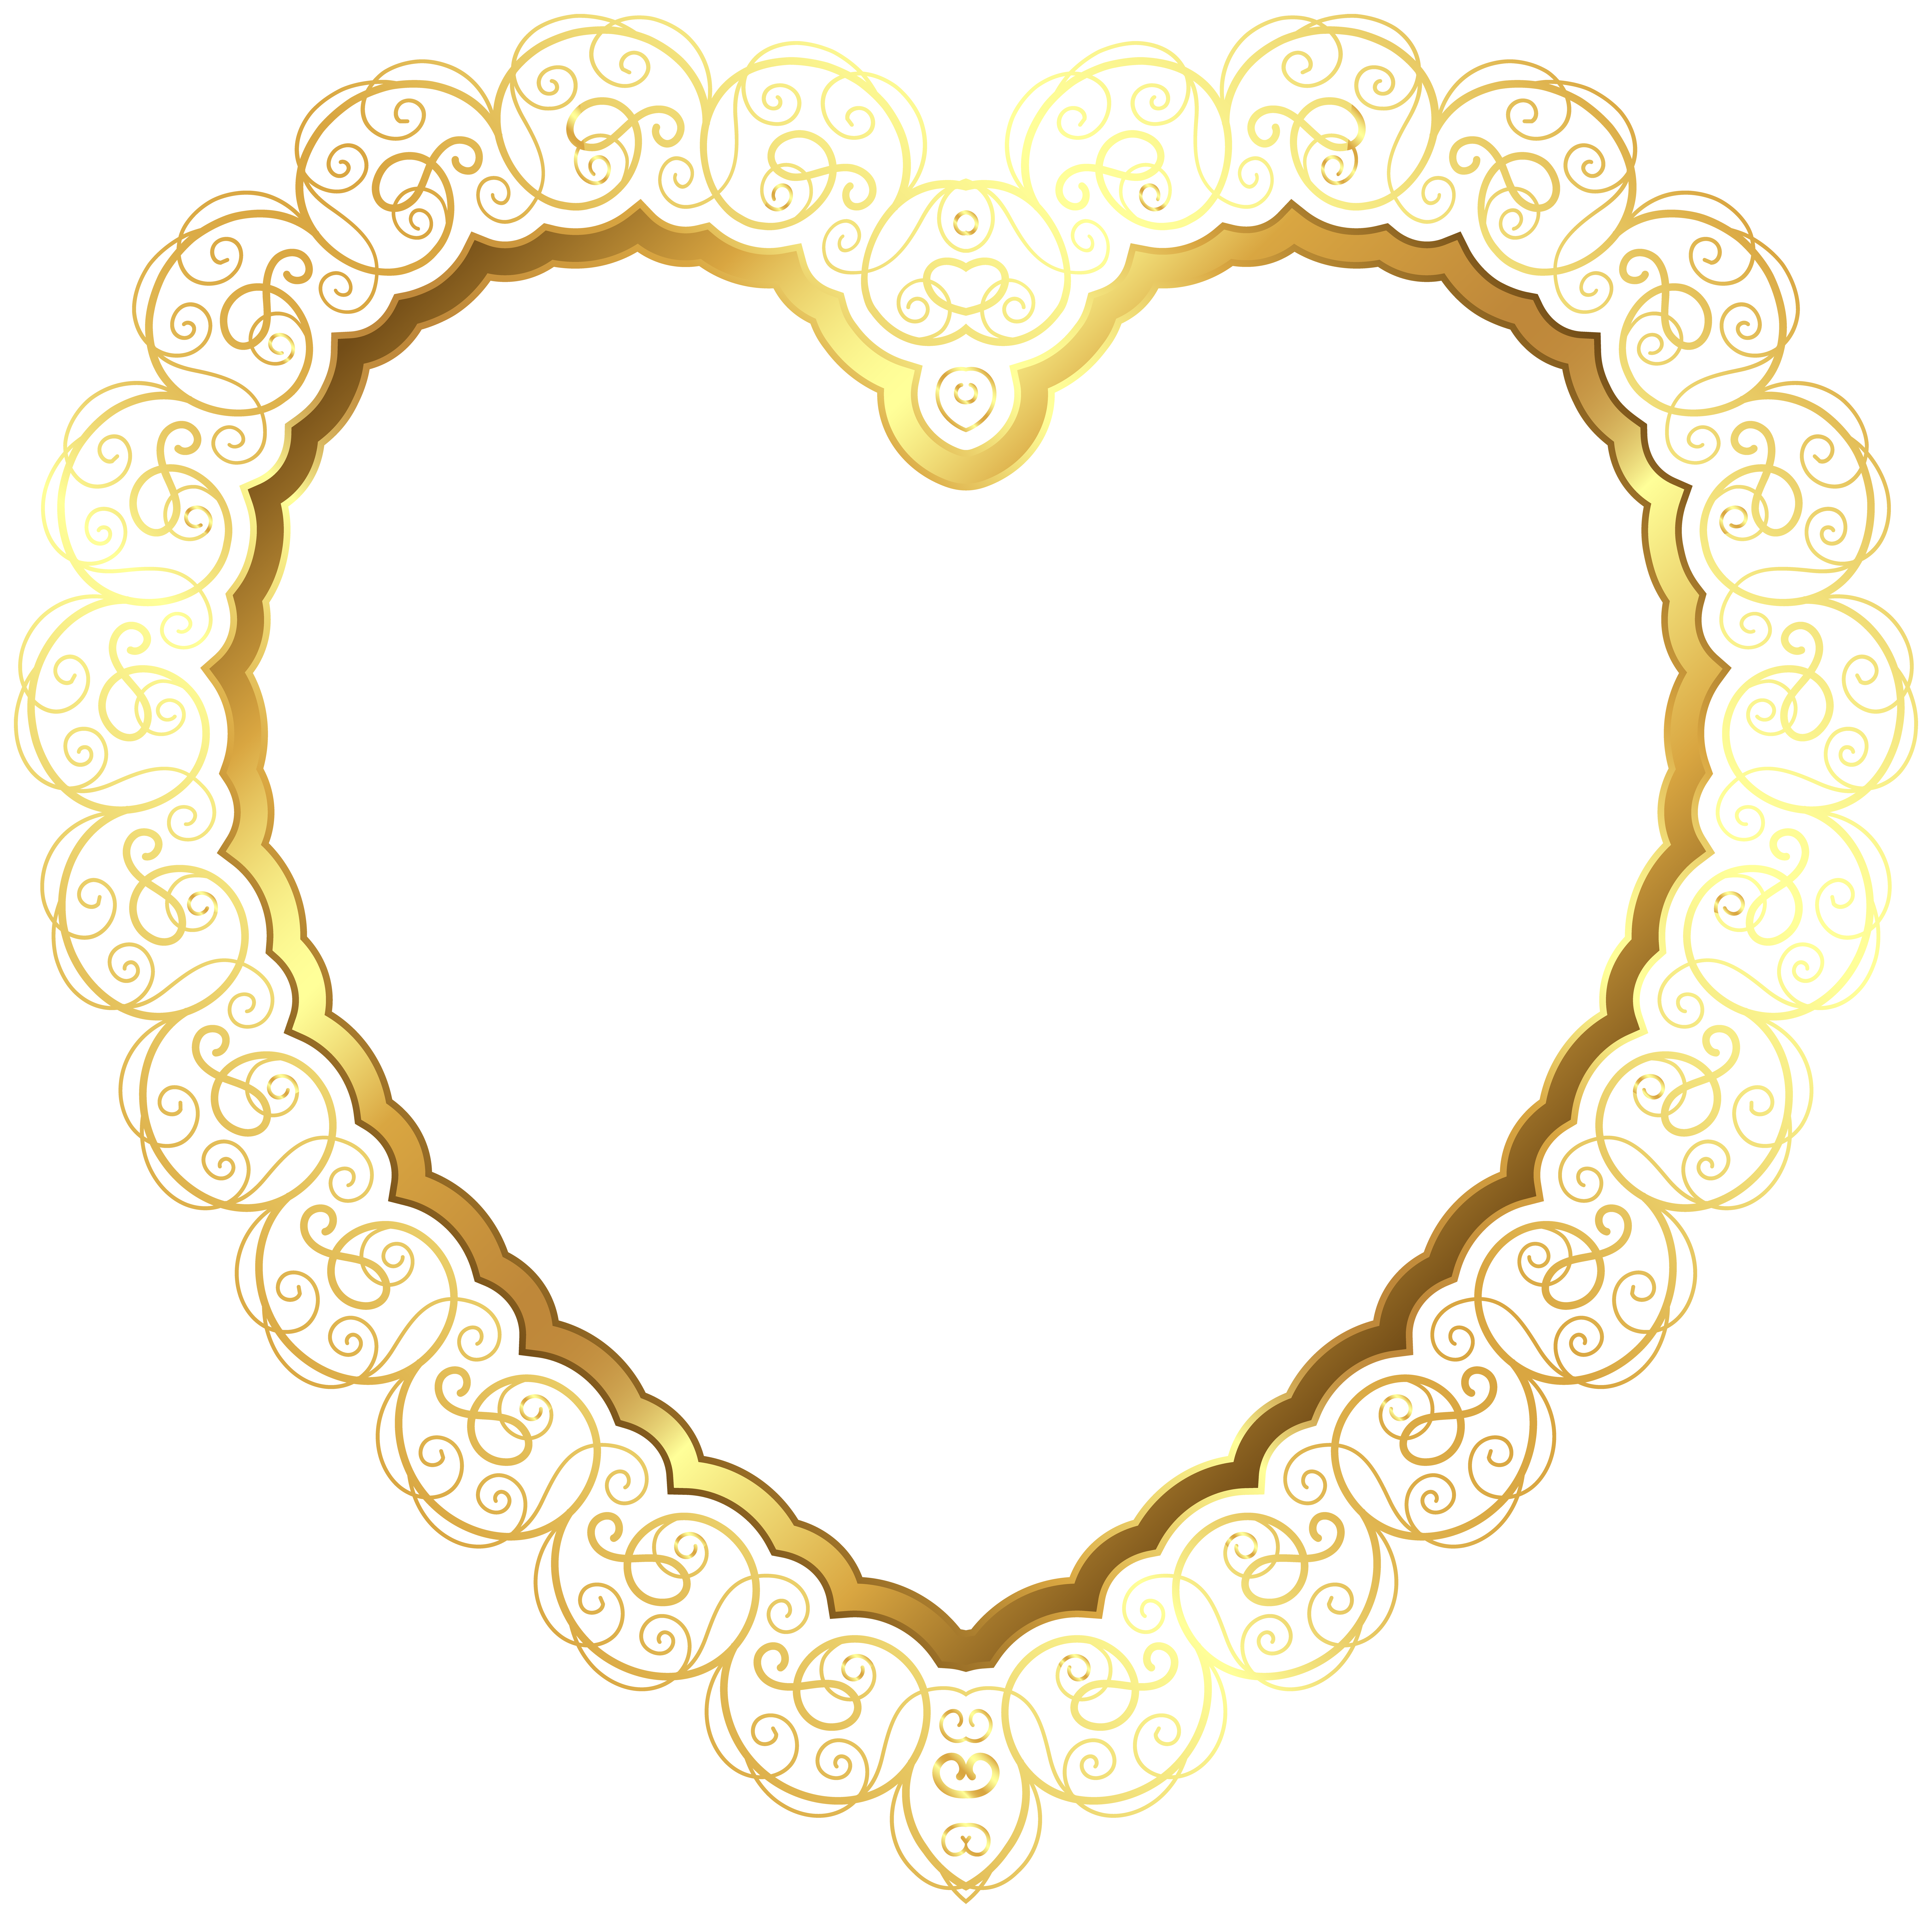 heart border clip art